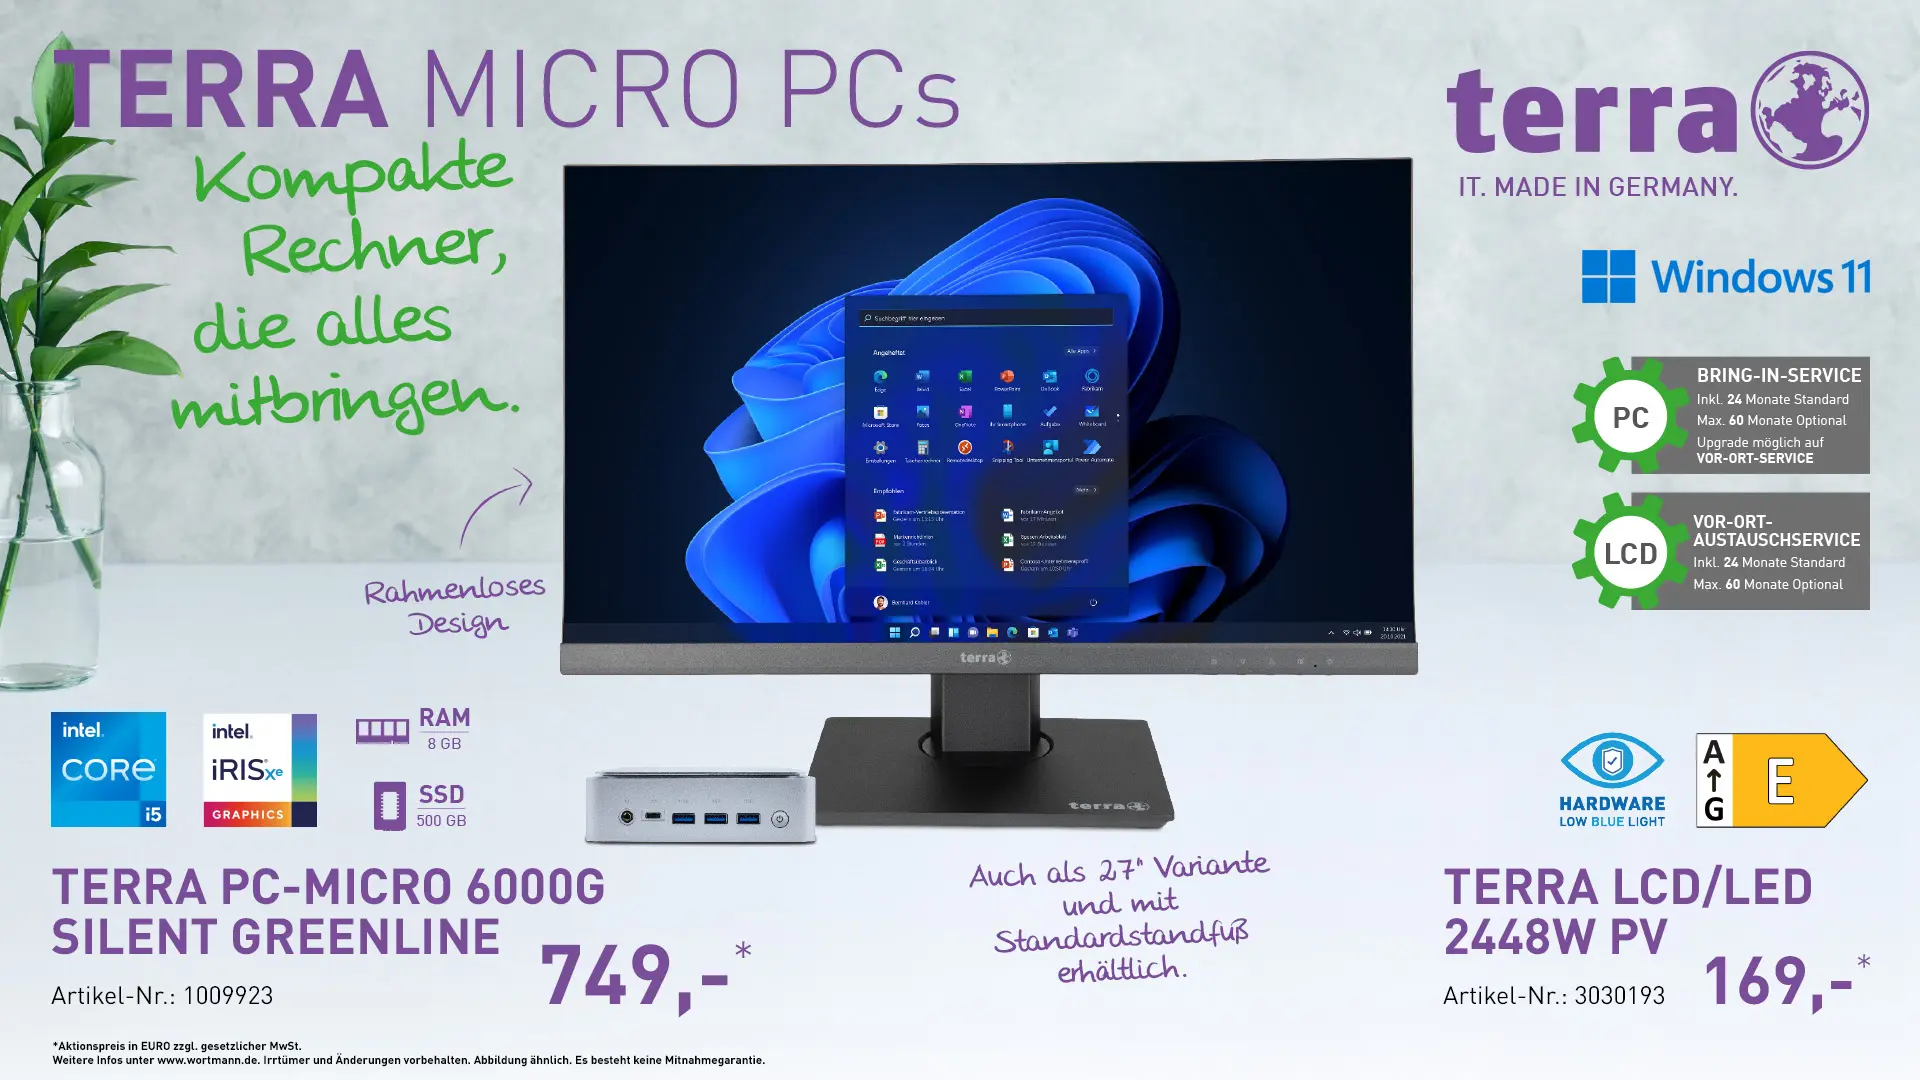 Terra PC-Micro 6000G Silent Greenline & Terra LCD/LED 2448w PV